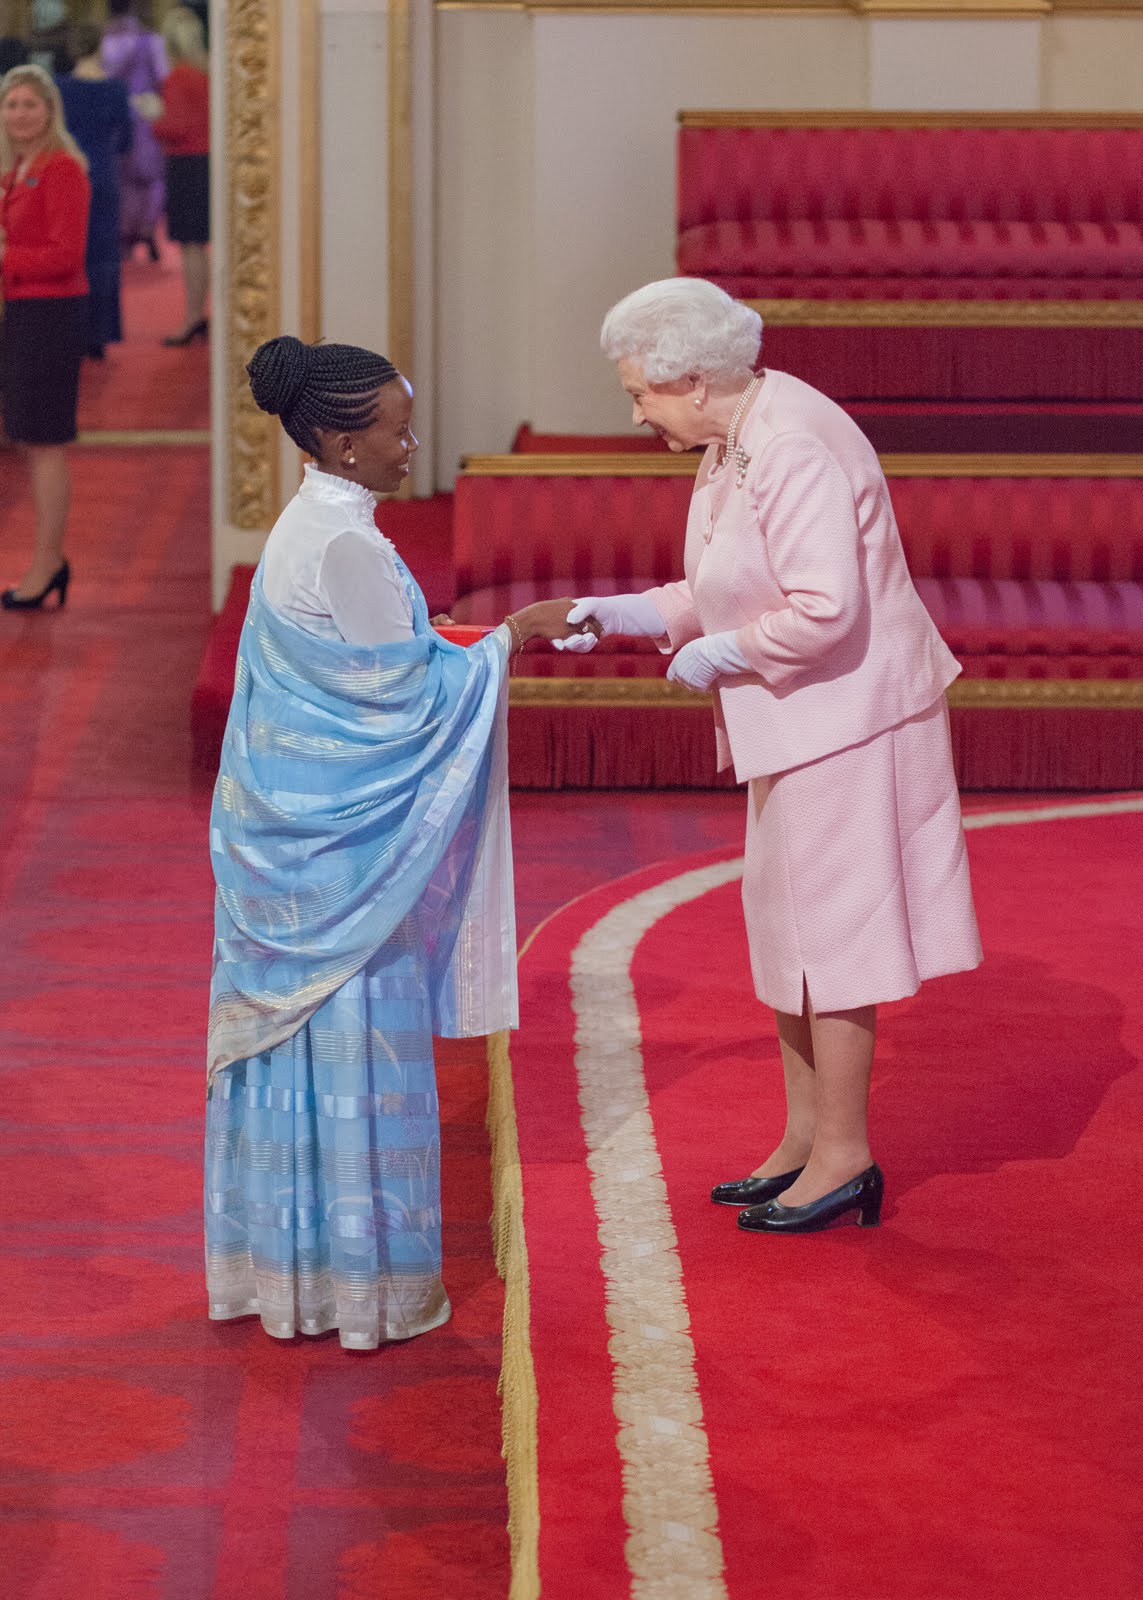 Nadia Hitimana 2015 Queen's Young Leader from Rwanda